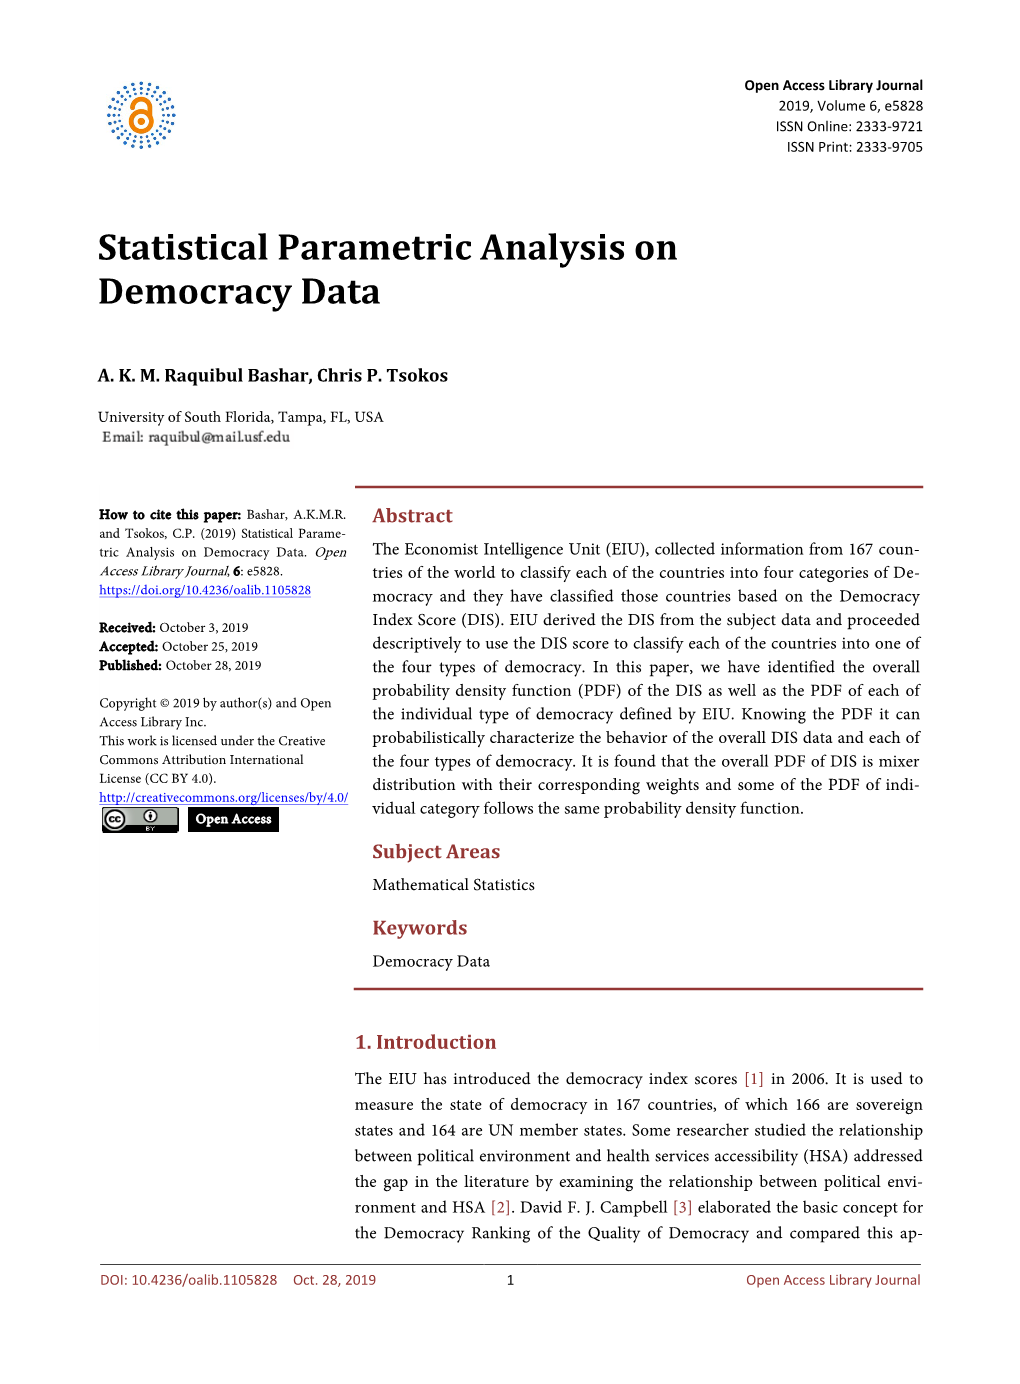 Statistical Parametric Analysis on Democracy Data